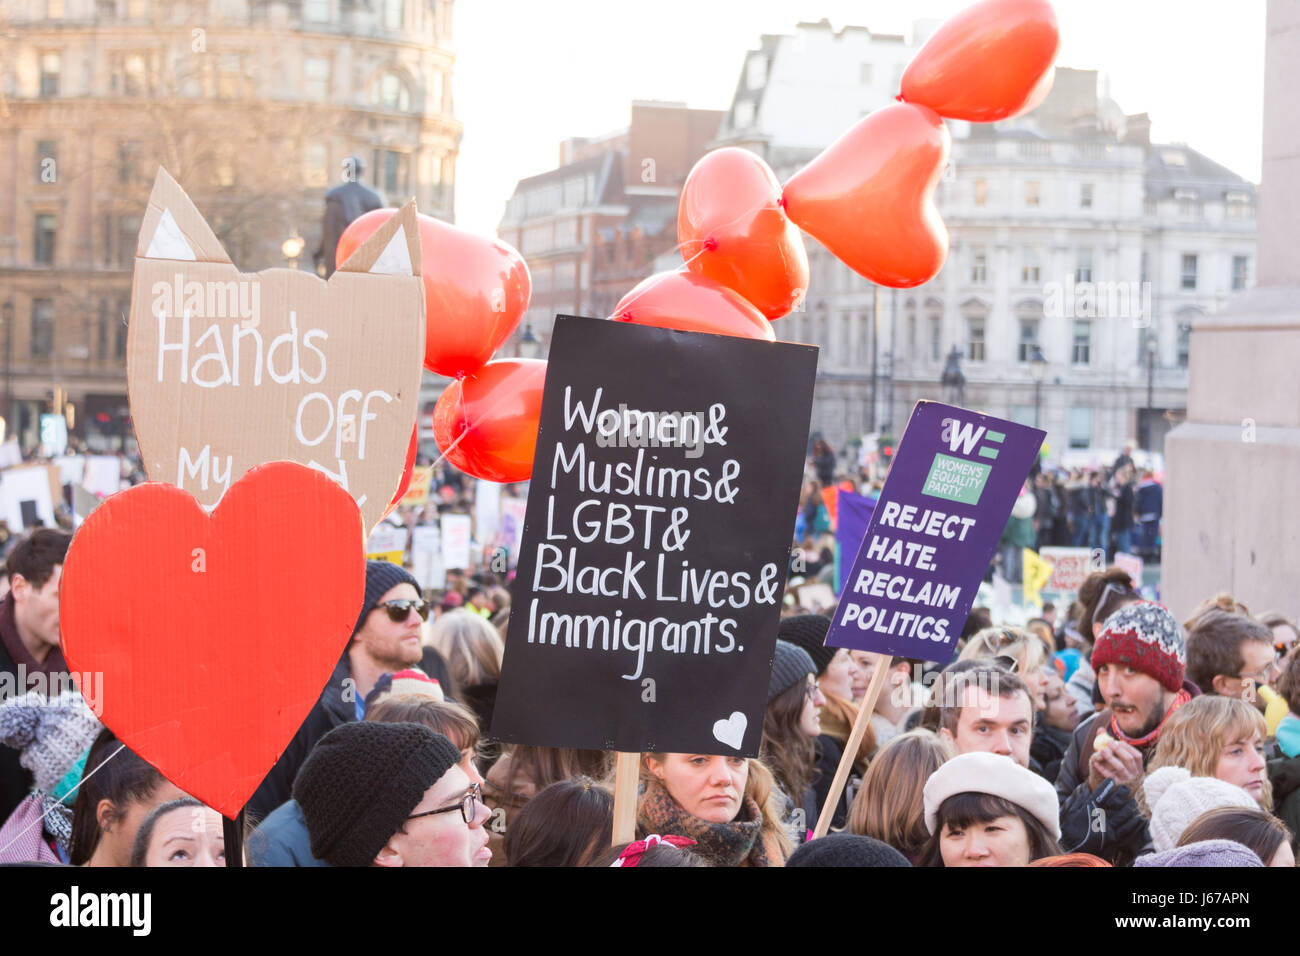 Women's March against Trump, placard women, muslim, LGBT, black lives, immigrants Stock Photo